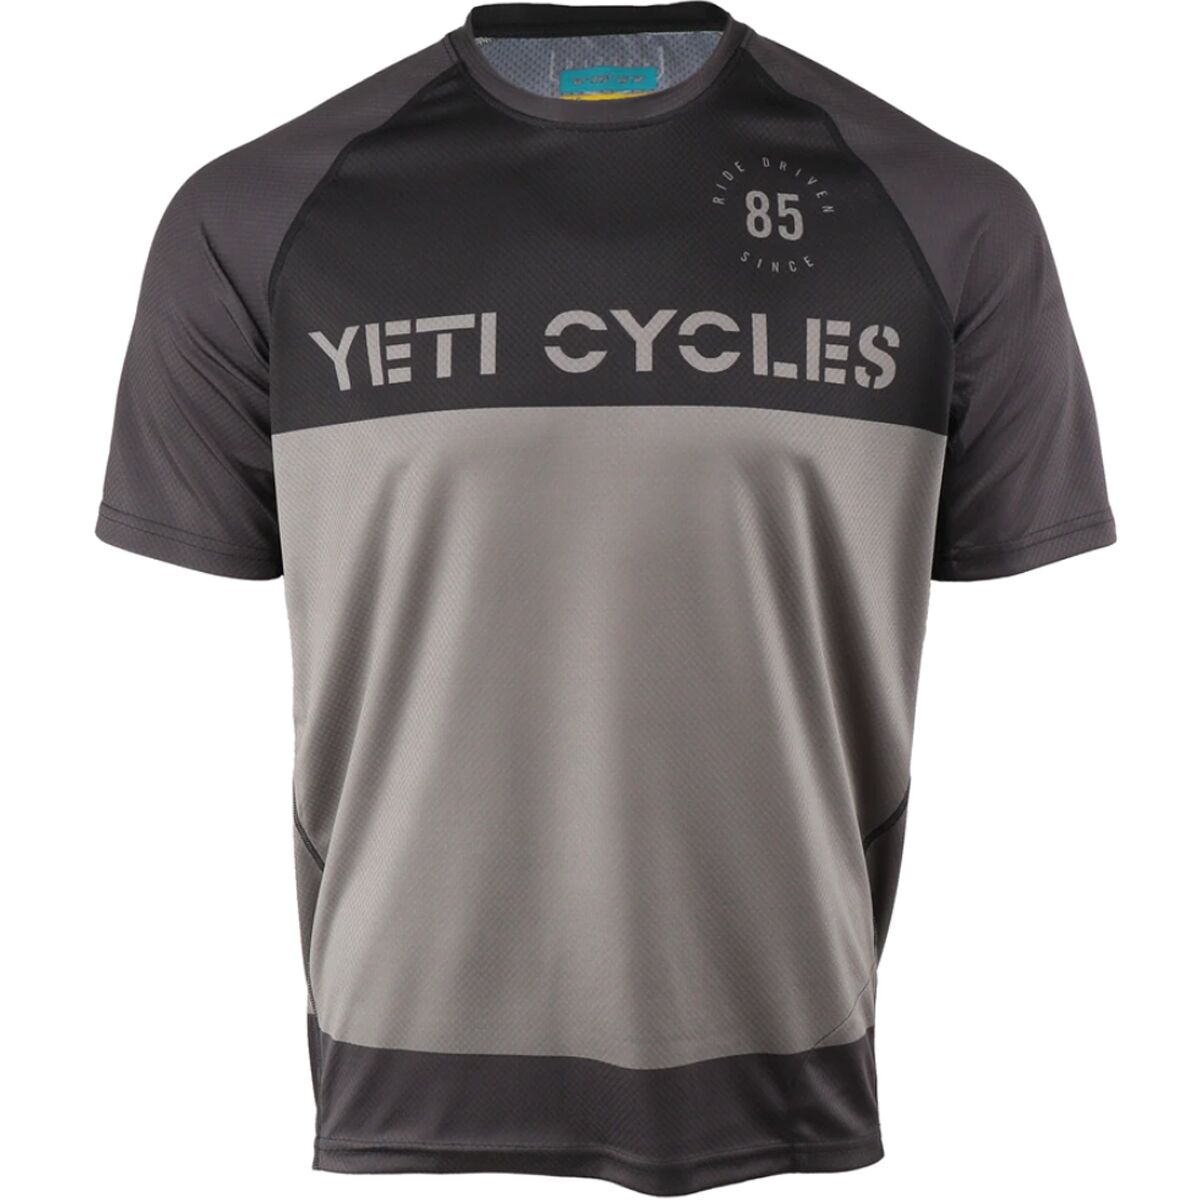 Yeti Cycles Longhorn Short-Sleeve Jersey - Men's